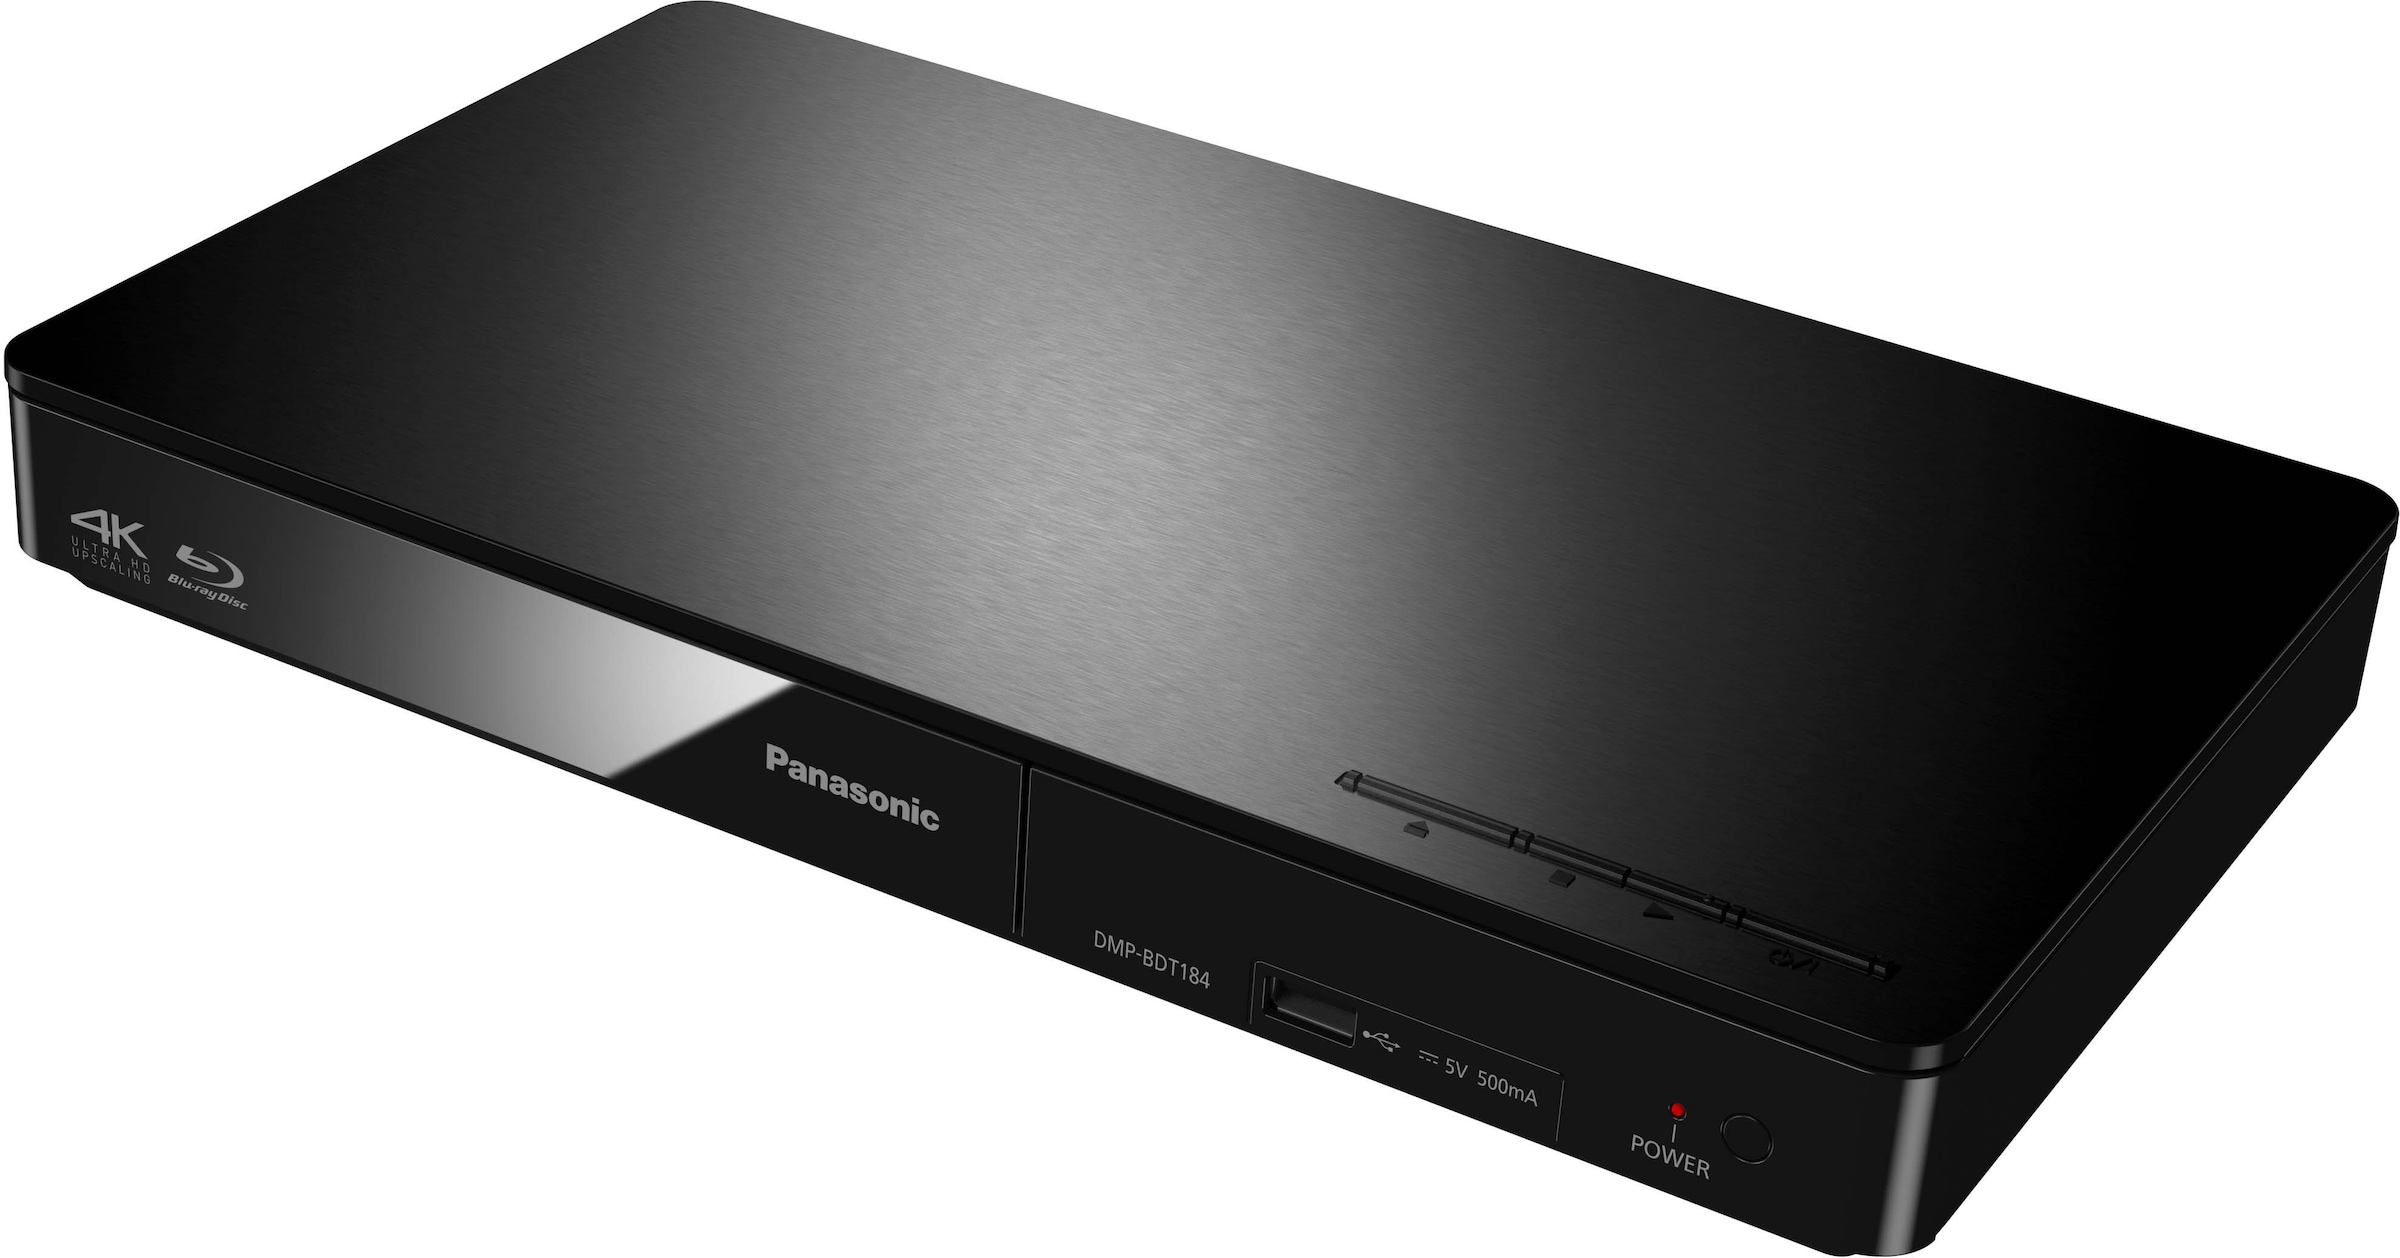 LAN Panasonic / DMP-BDT185«, Upscaling-Schnellstart-Modus versandkostenfrei Blu-ray-Player ♕ auf (Ethernet), »DMP-BDT184 4K